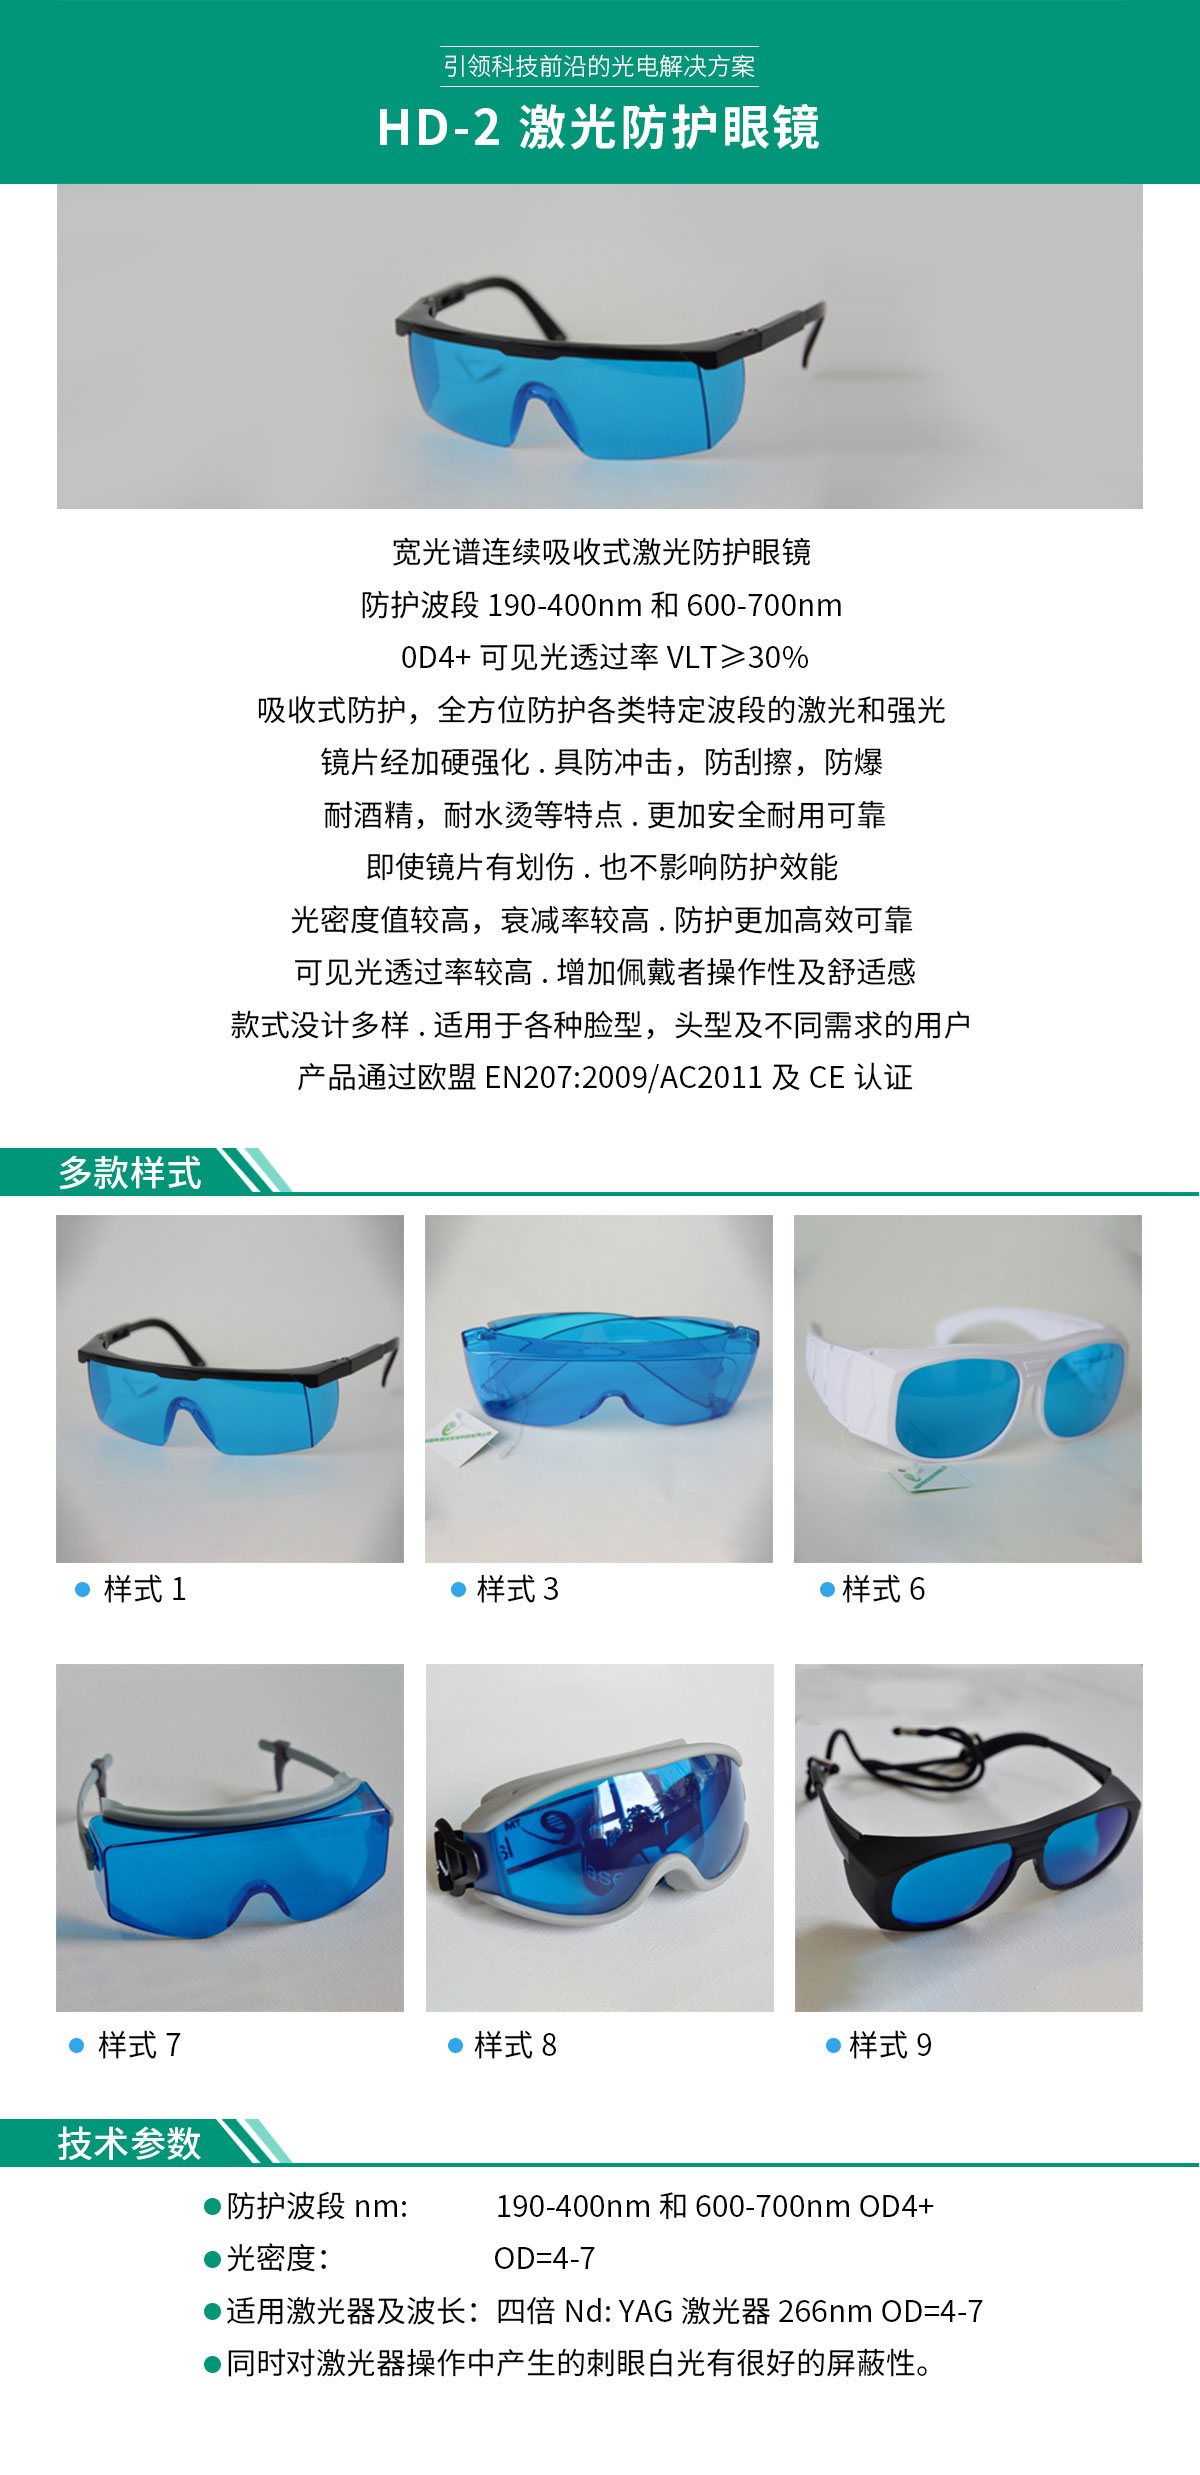 HD-2-激光防護眼鏡